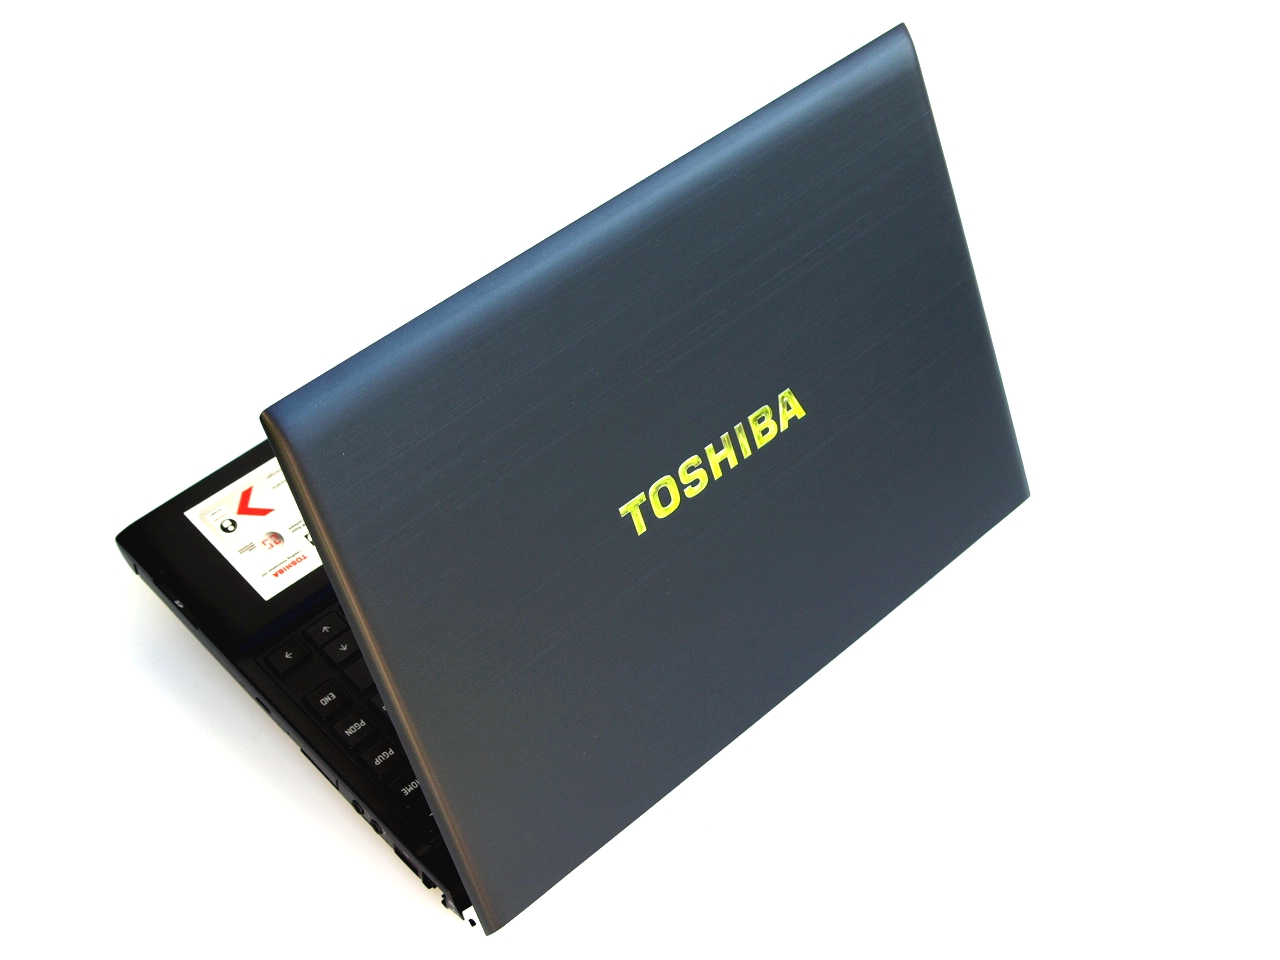 Analisis Sub-Portatil Toshiba Satellite R630 - Notebookcheck.org